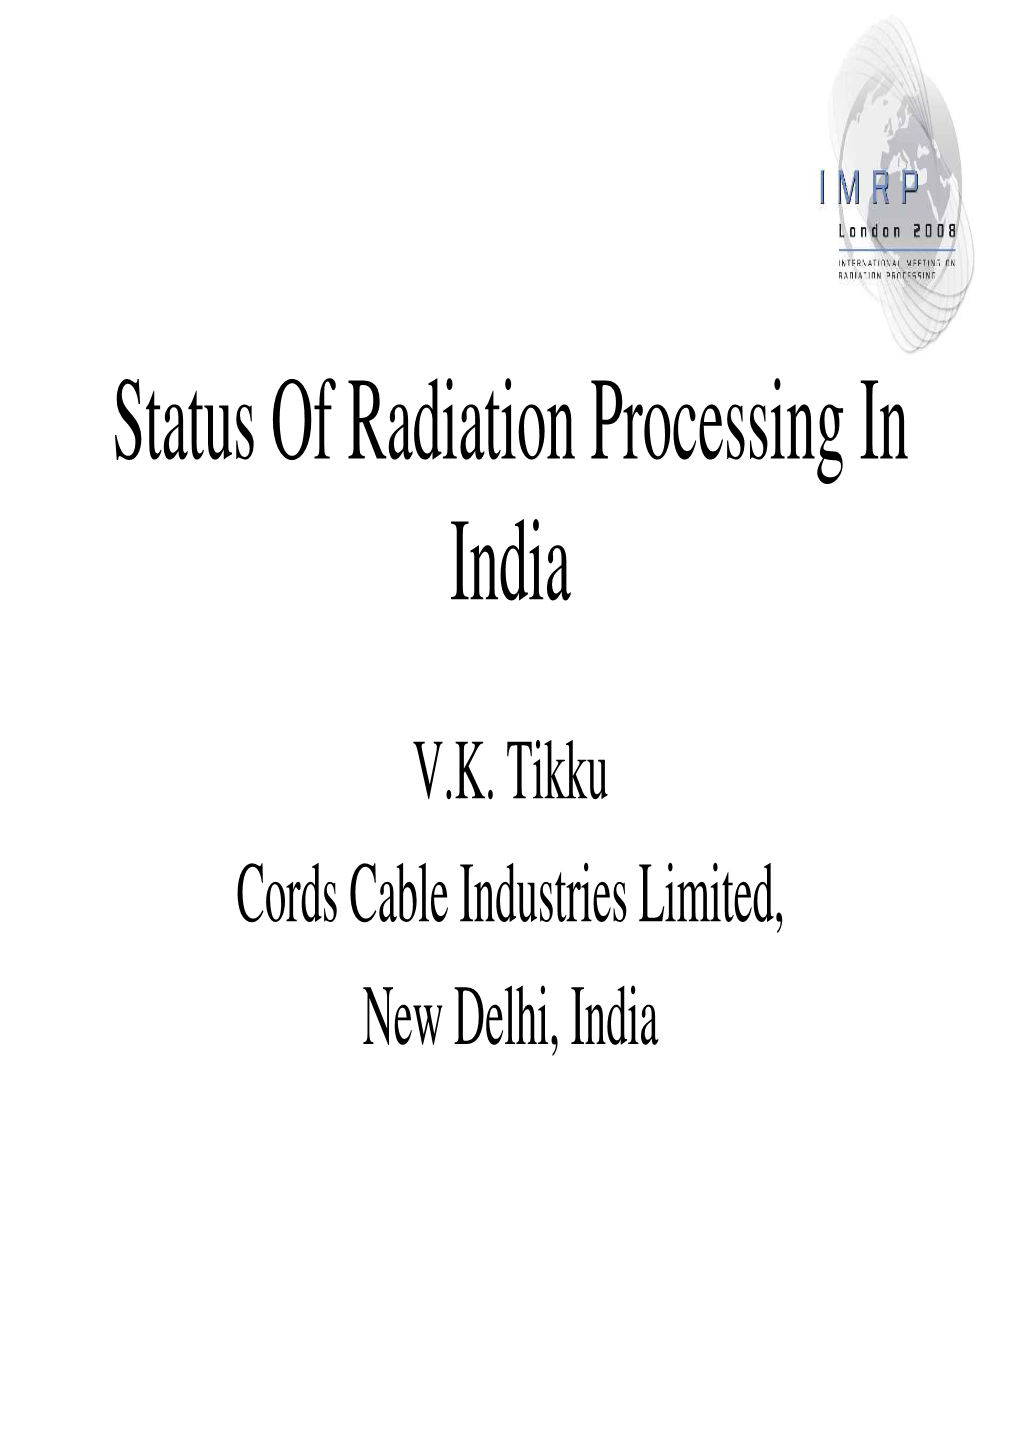 Status of Radiation Processing in India